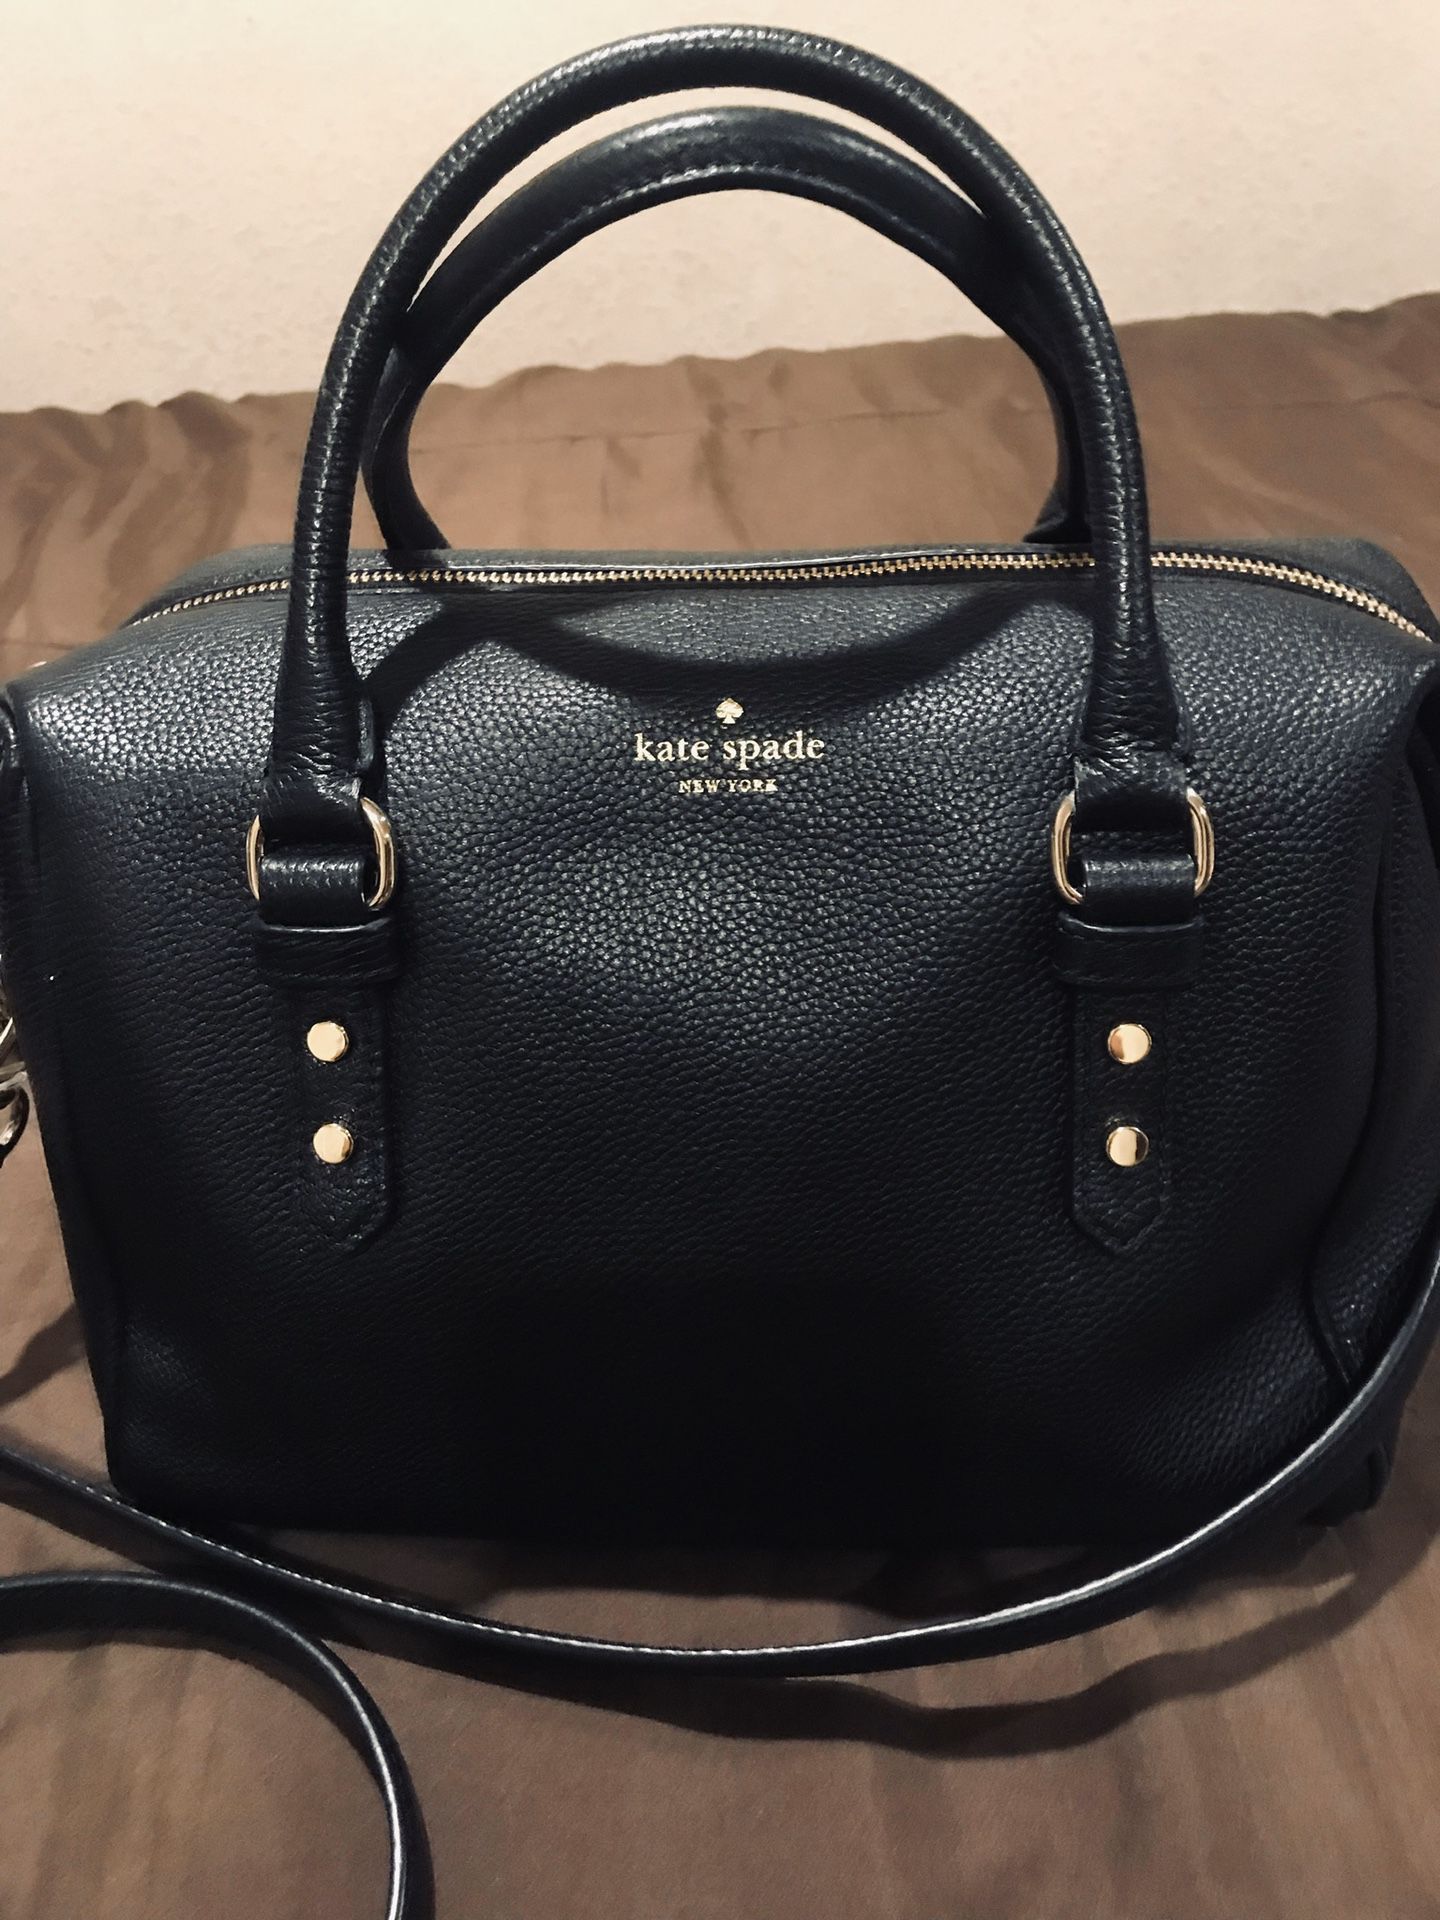 Kate Spade ♠️ beautiful purse!